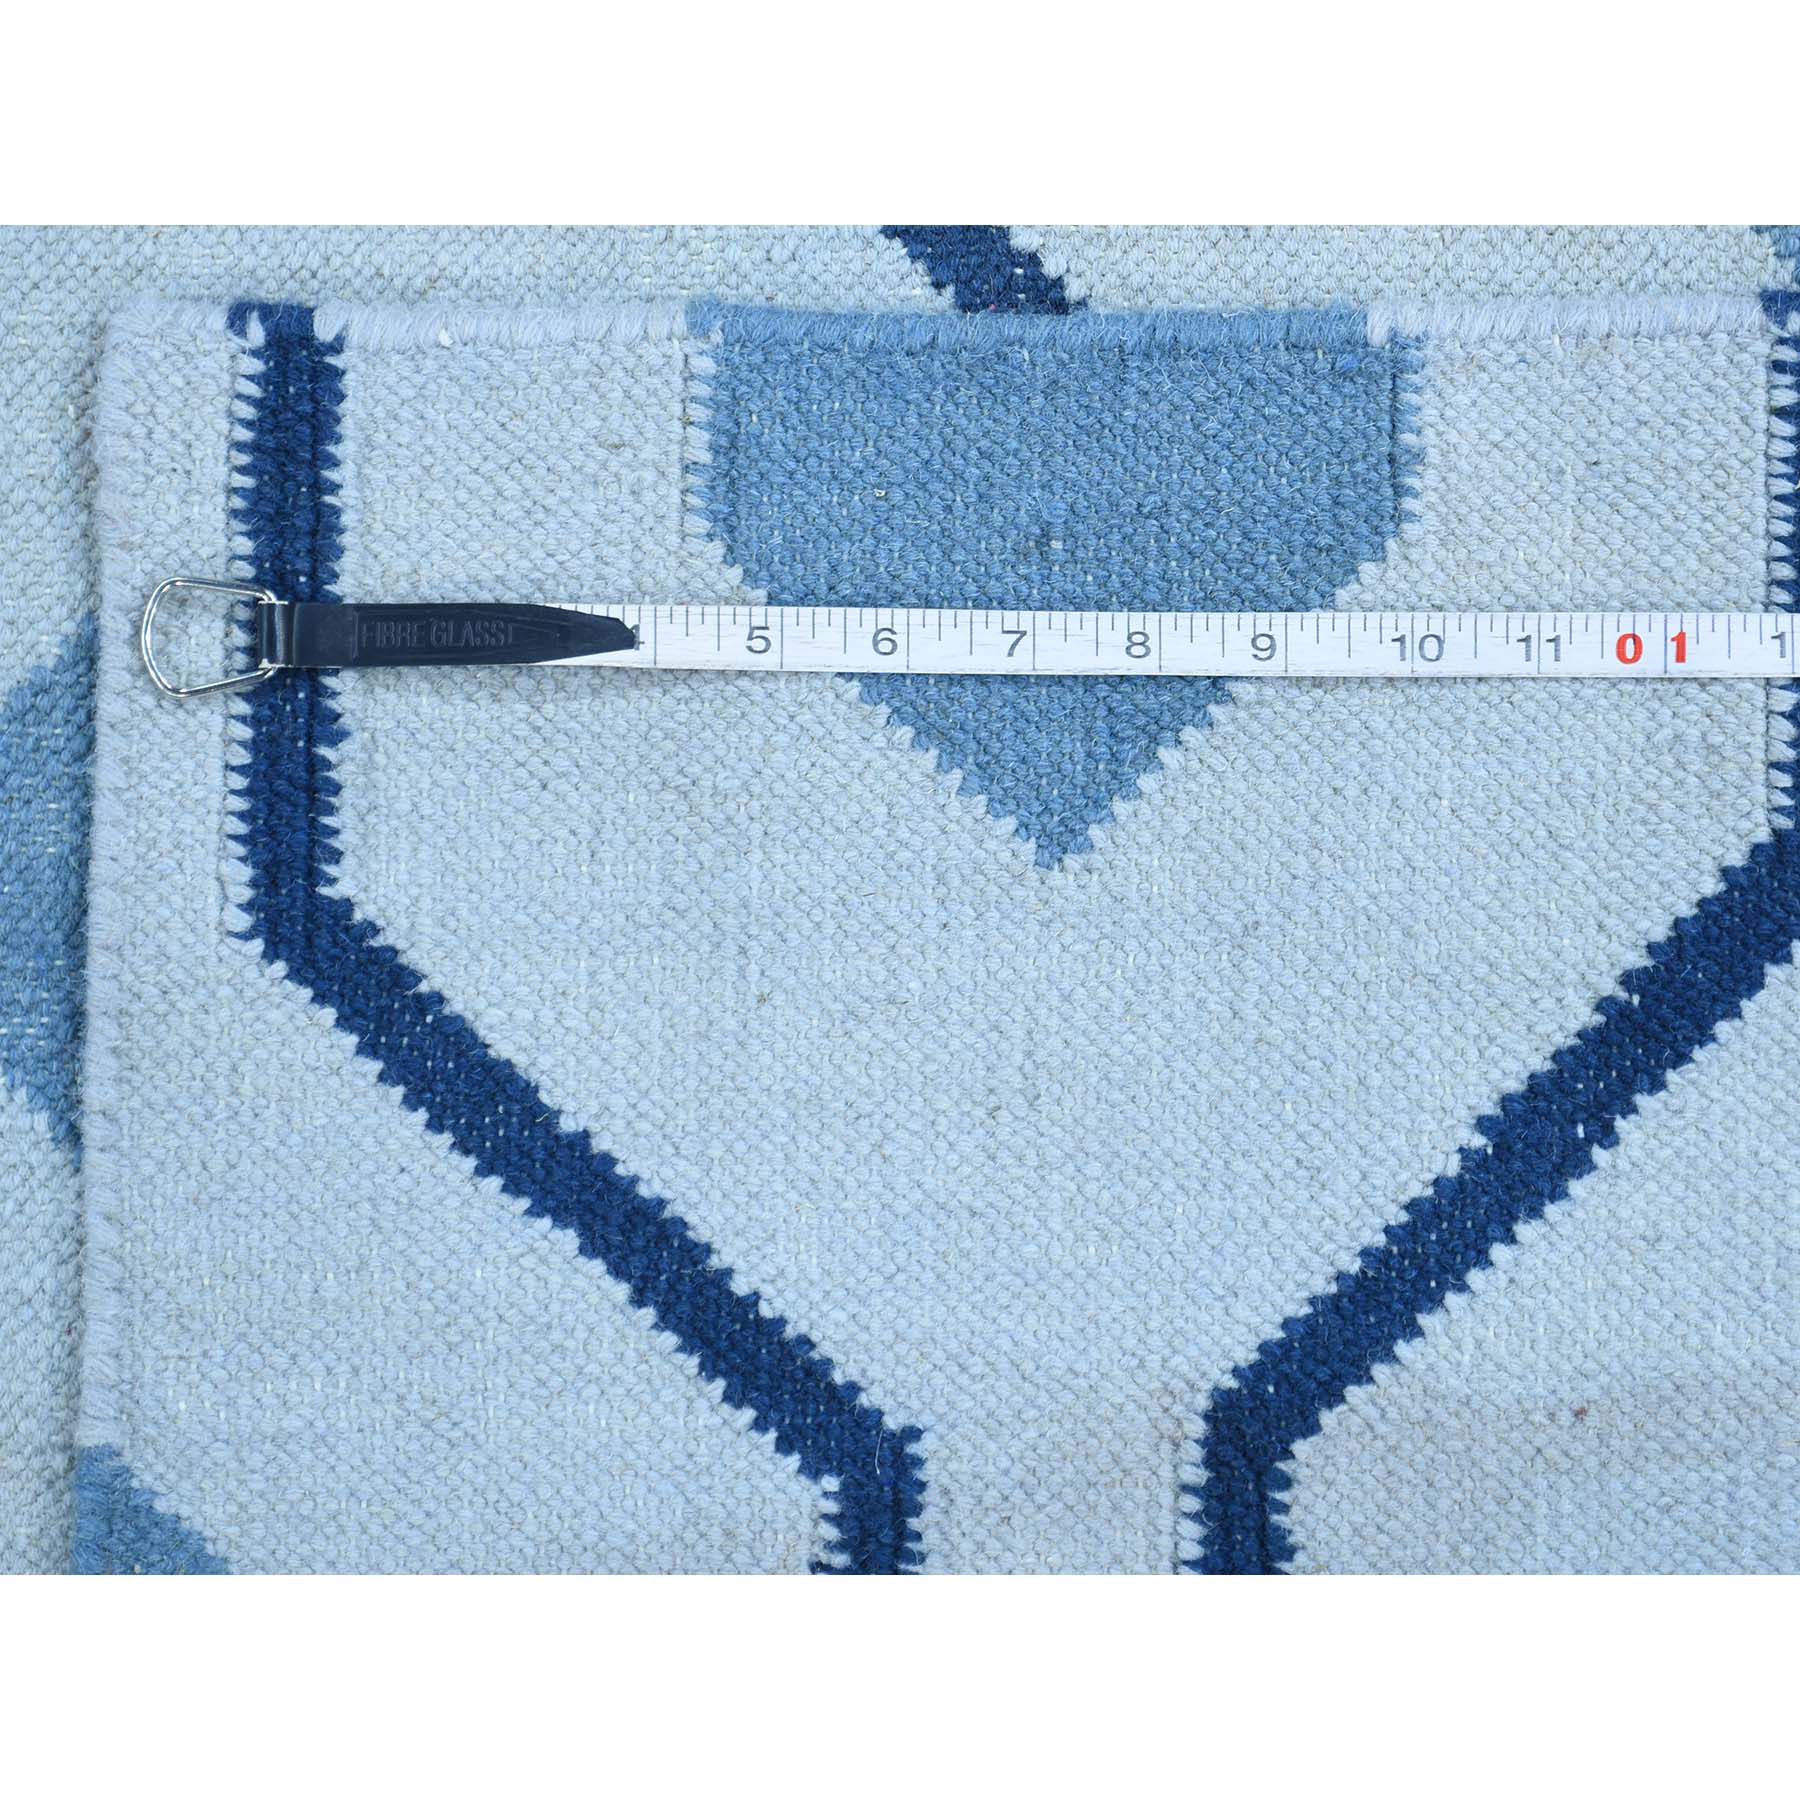 2-5 x6- Hand-Woven Reversible Kilim Flat Weave Oriental Runner Rug 